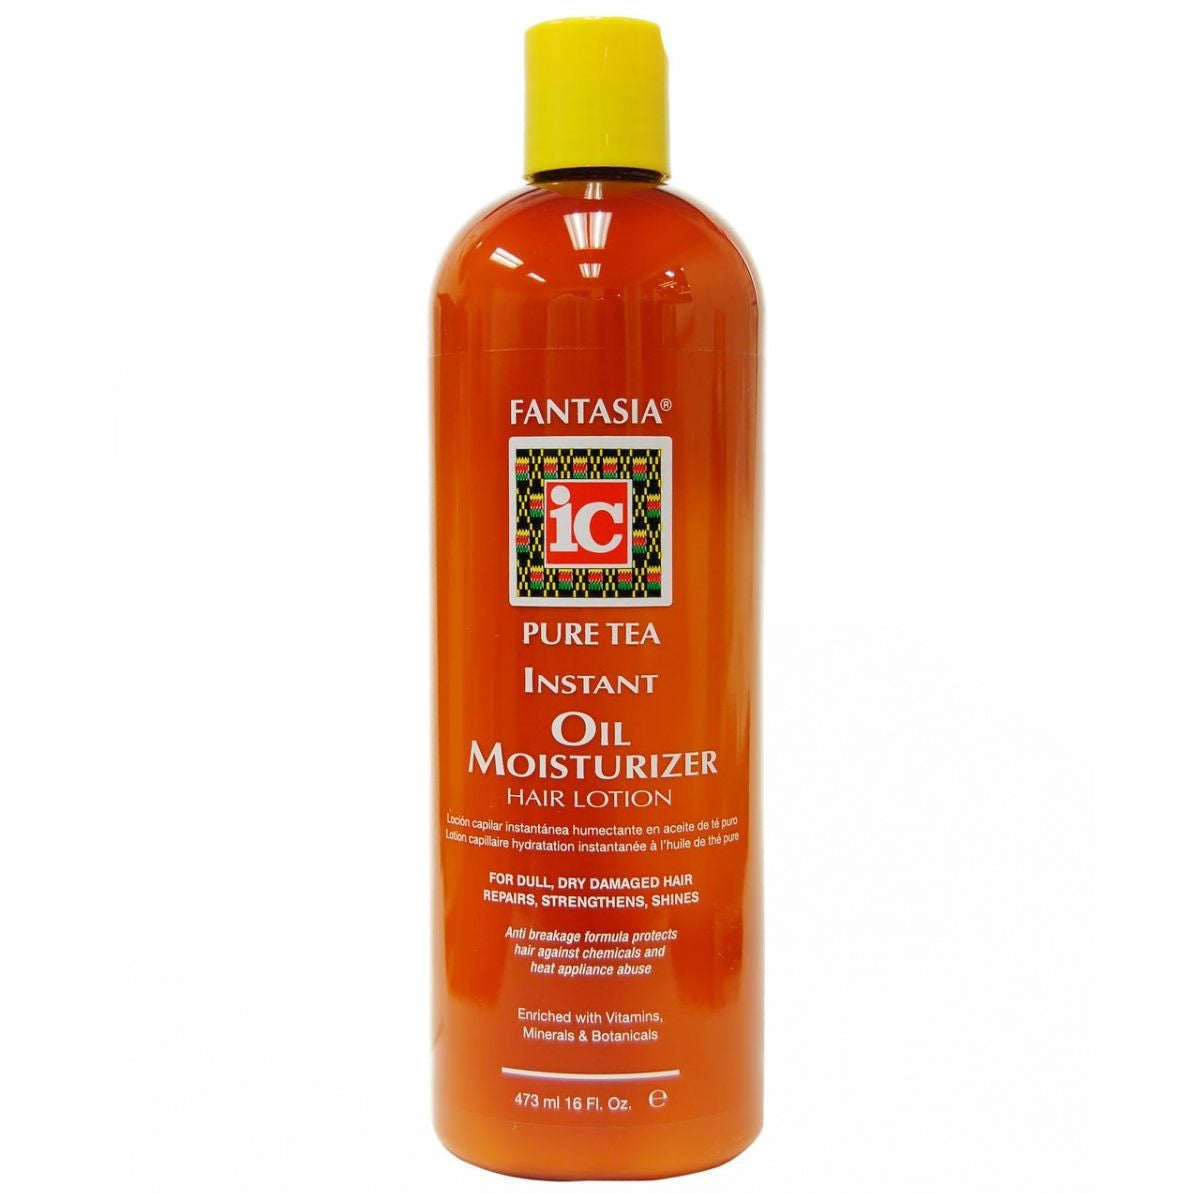 Fantasia IC Pure Tea Instant Oil Moisturizer Hair Lotion 473ml